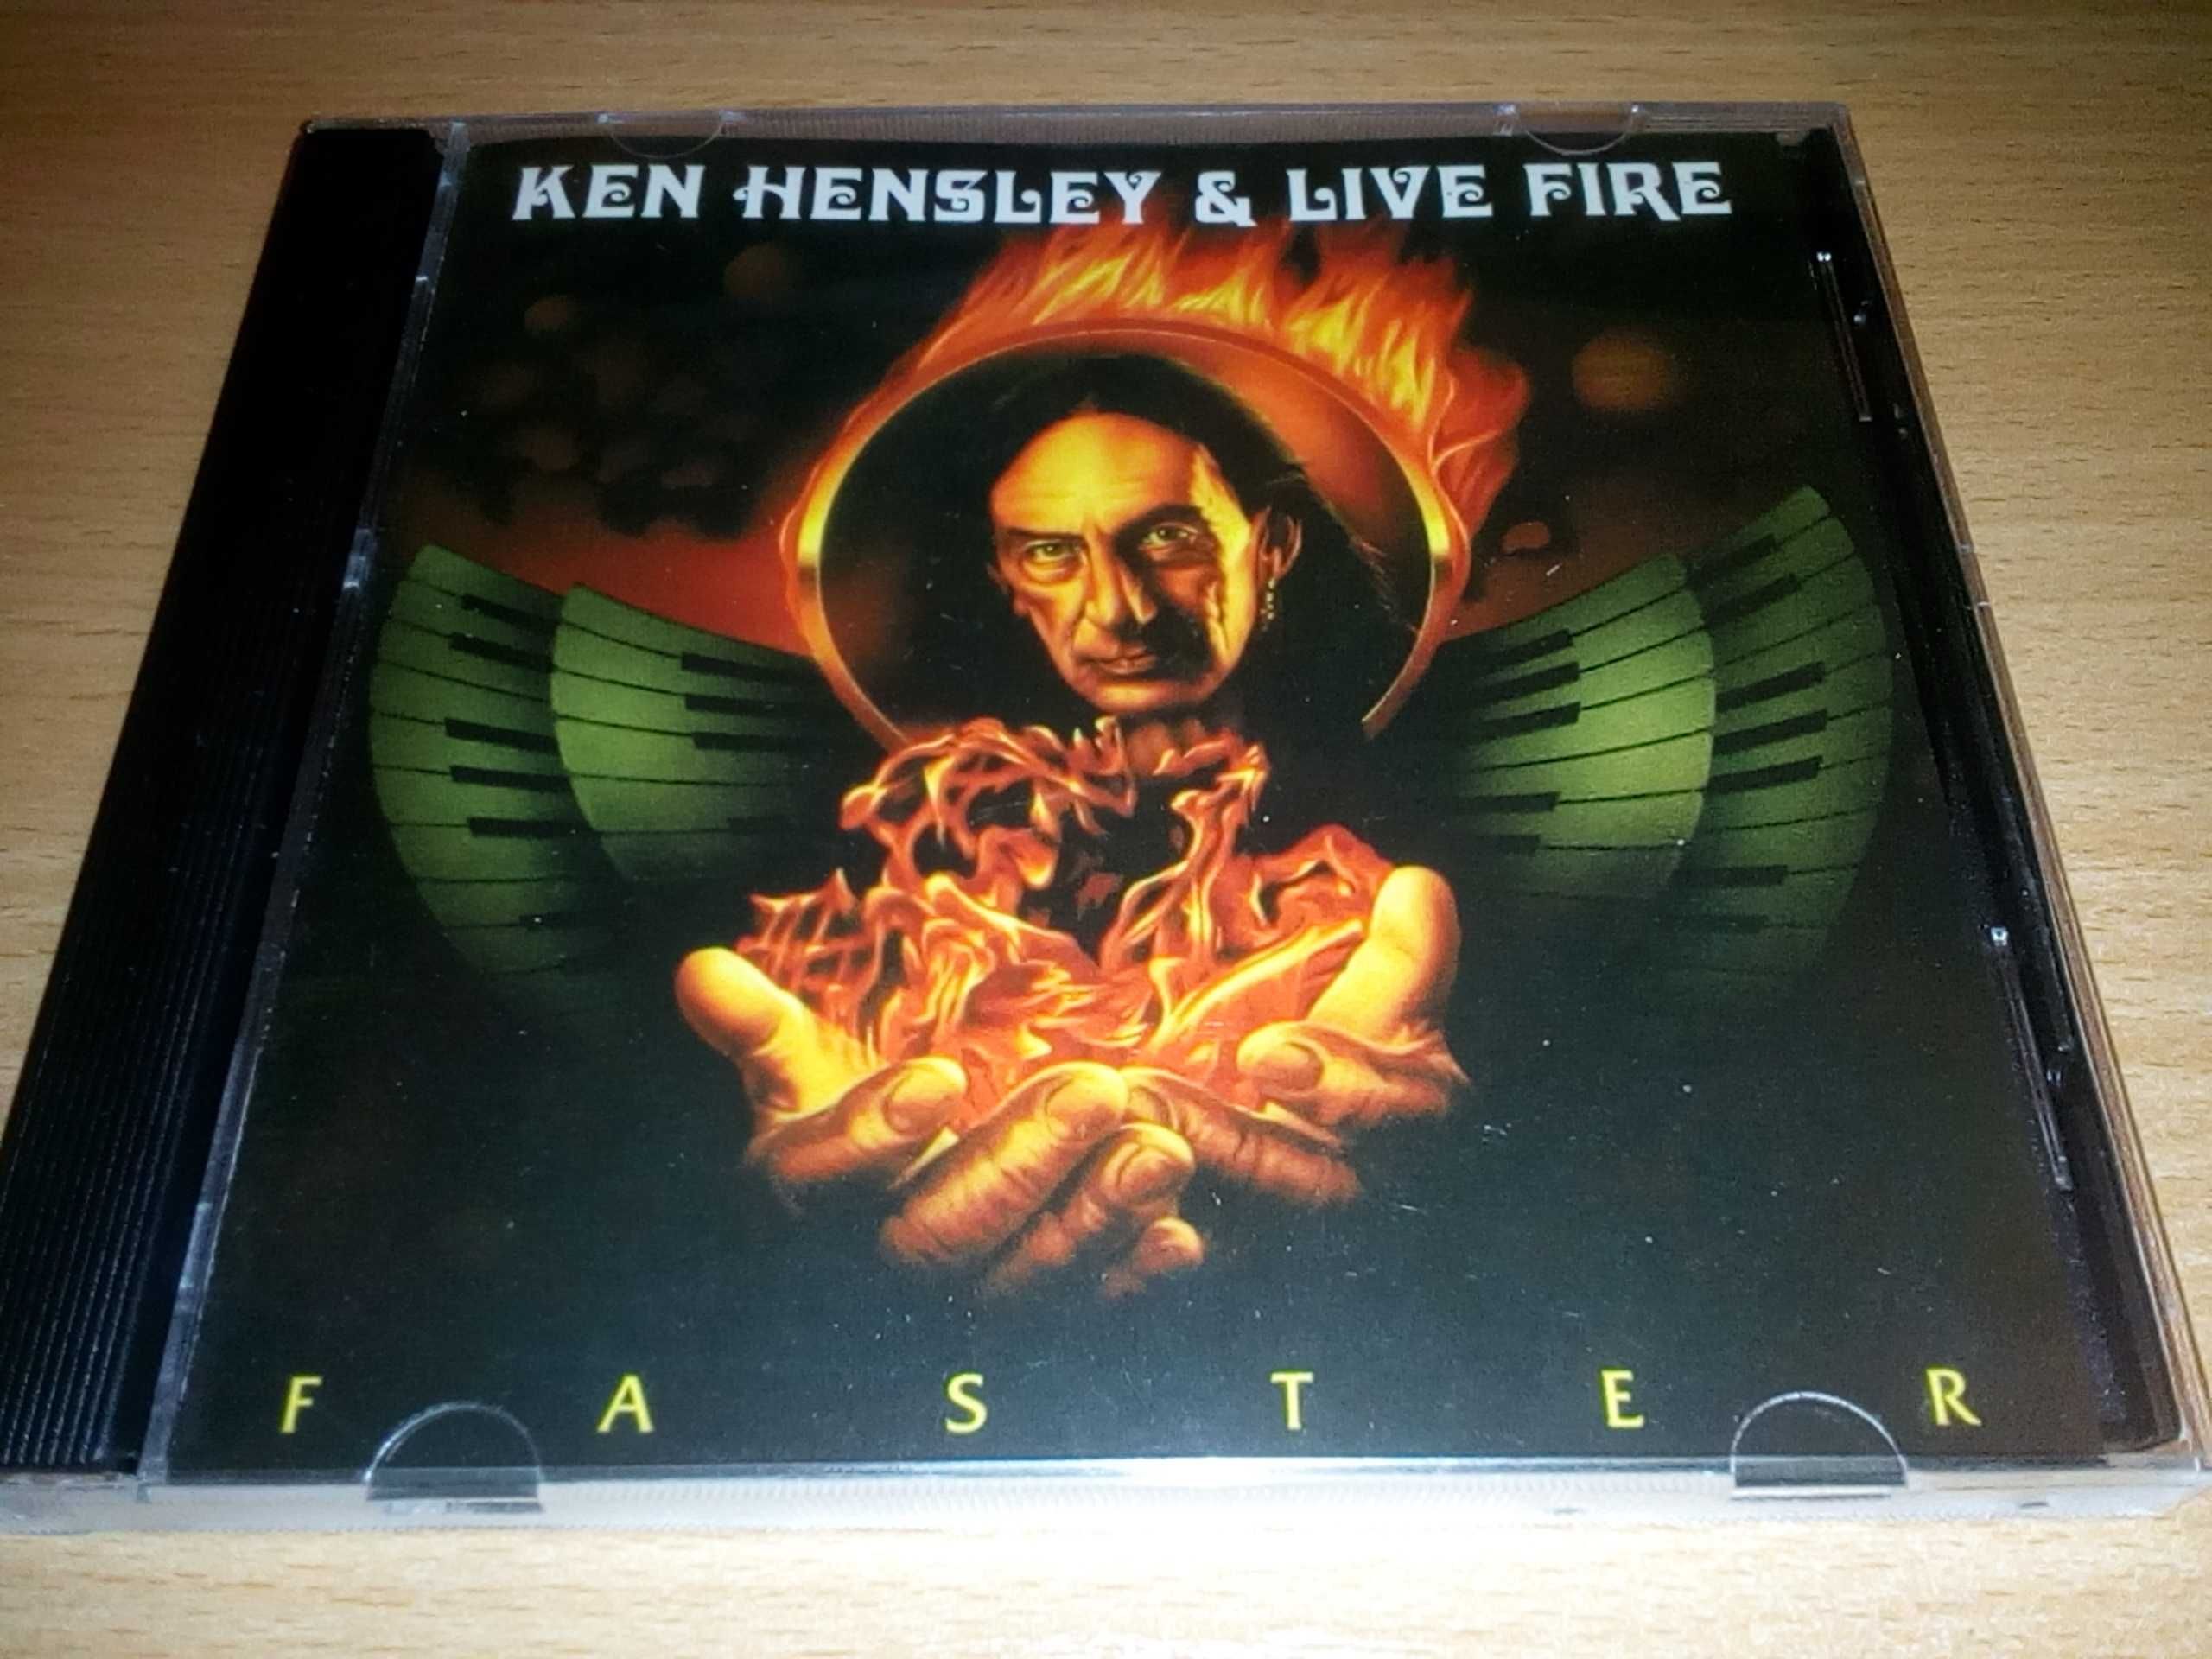 Ken Hensley (Uriah Heep) & Live fire - Faster